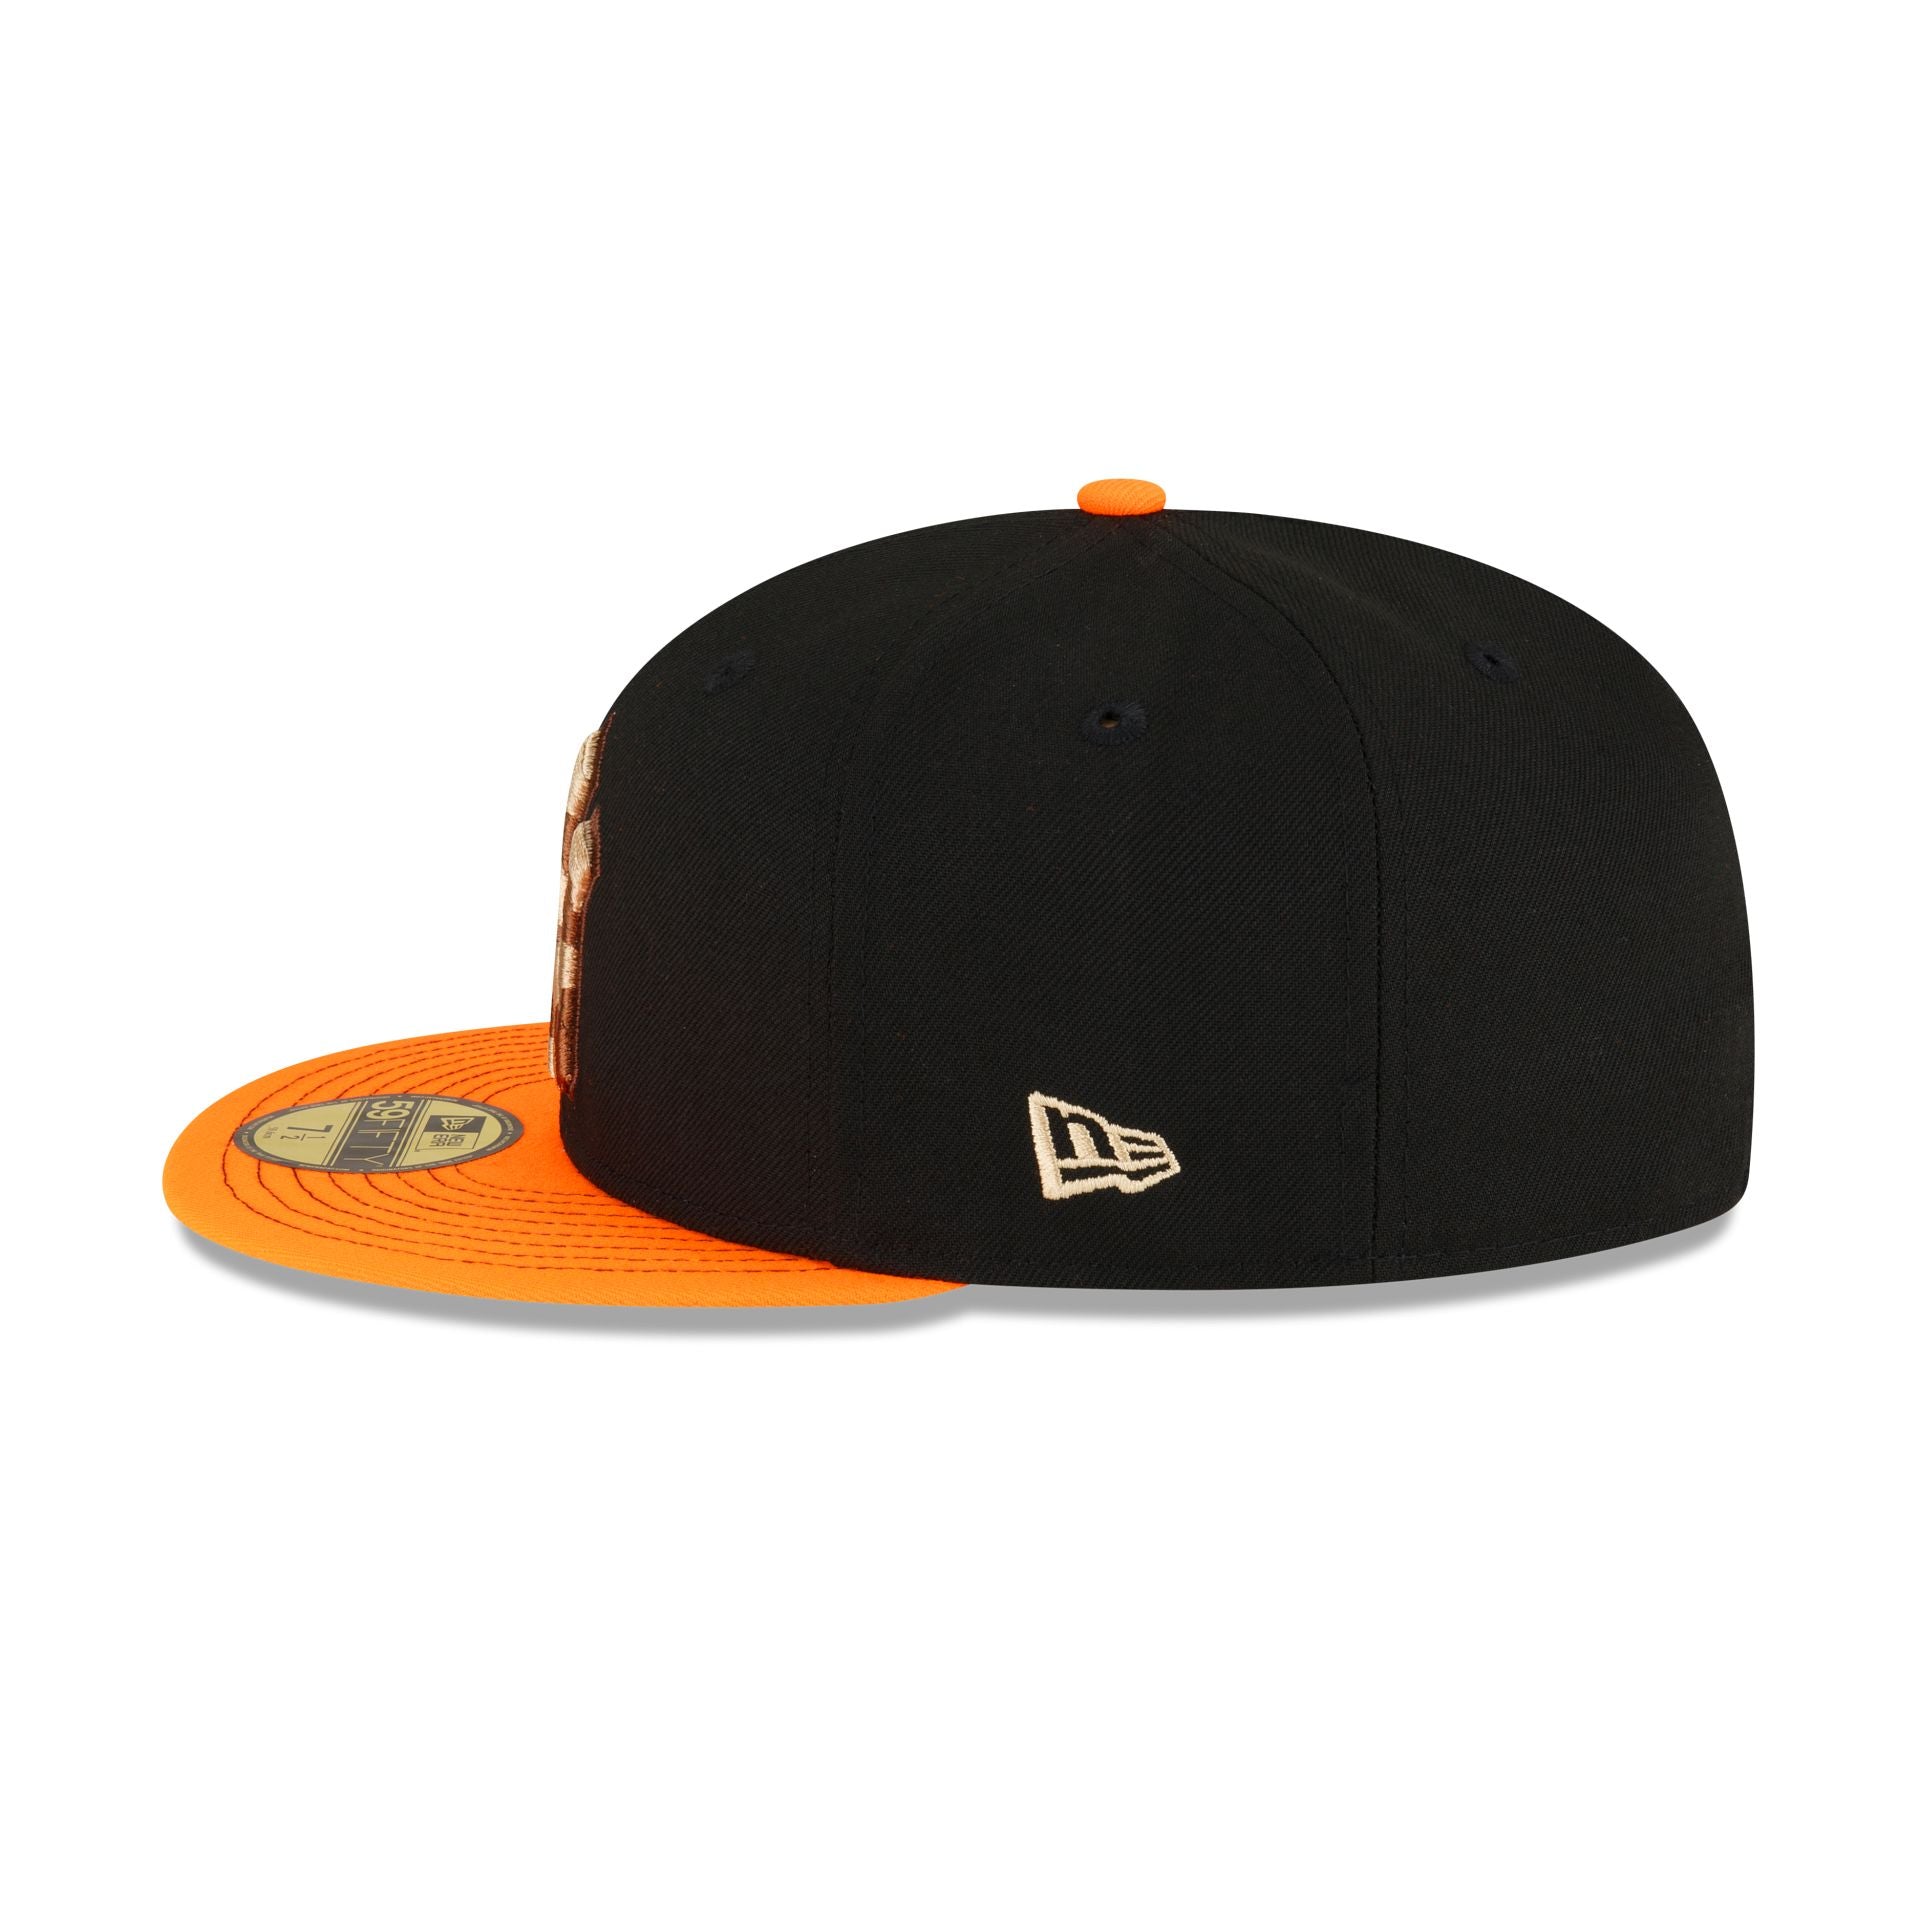 Just Caps Yankees New Fitted Era – New Hat Cap Orange Visor York 59FIFTY